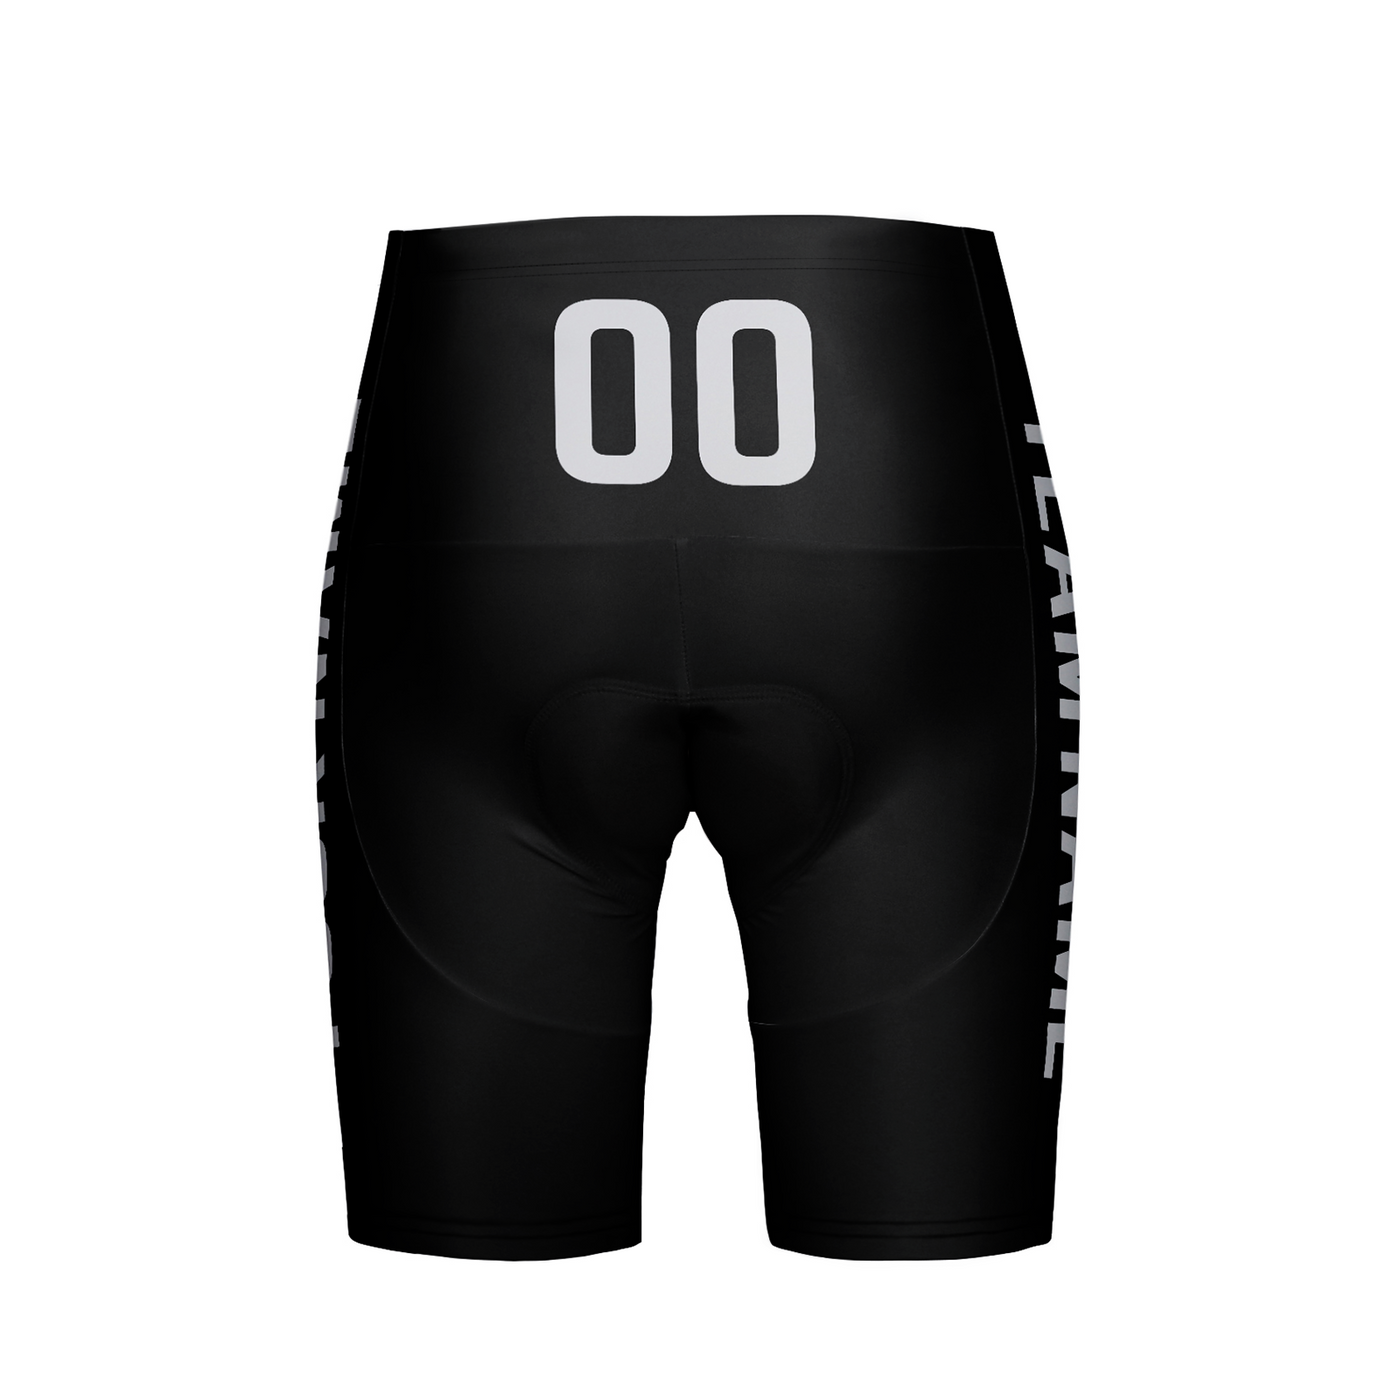 Customized Las Vegas Team Unisex Cycling Shorts